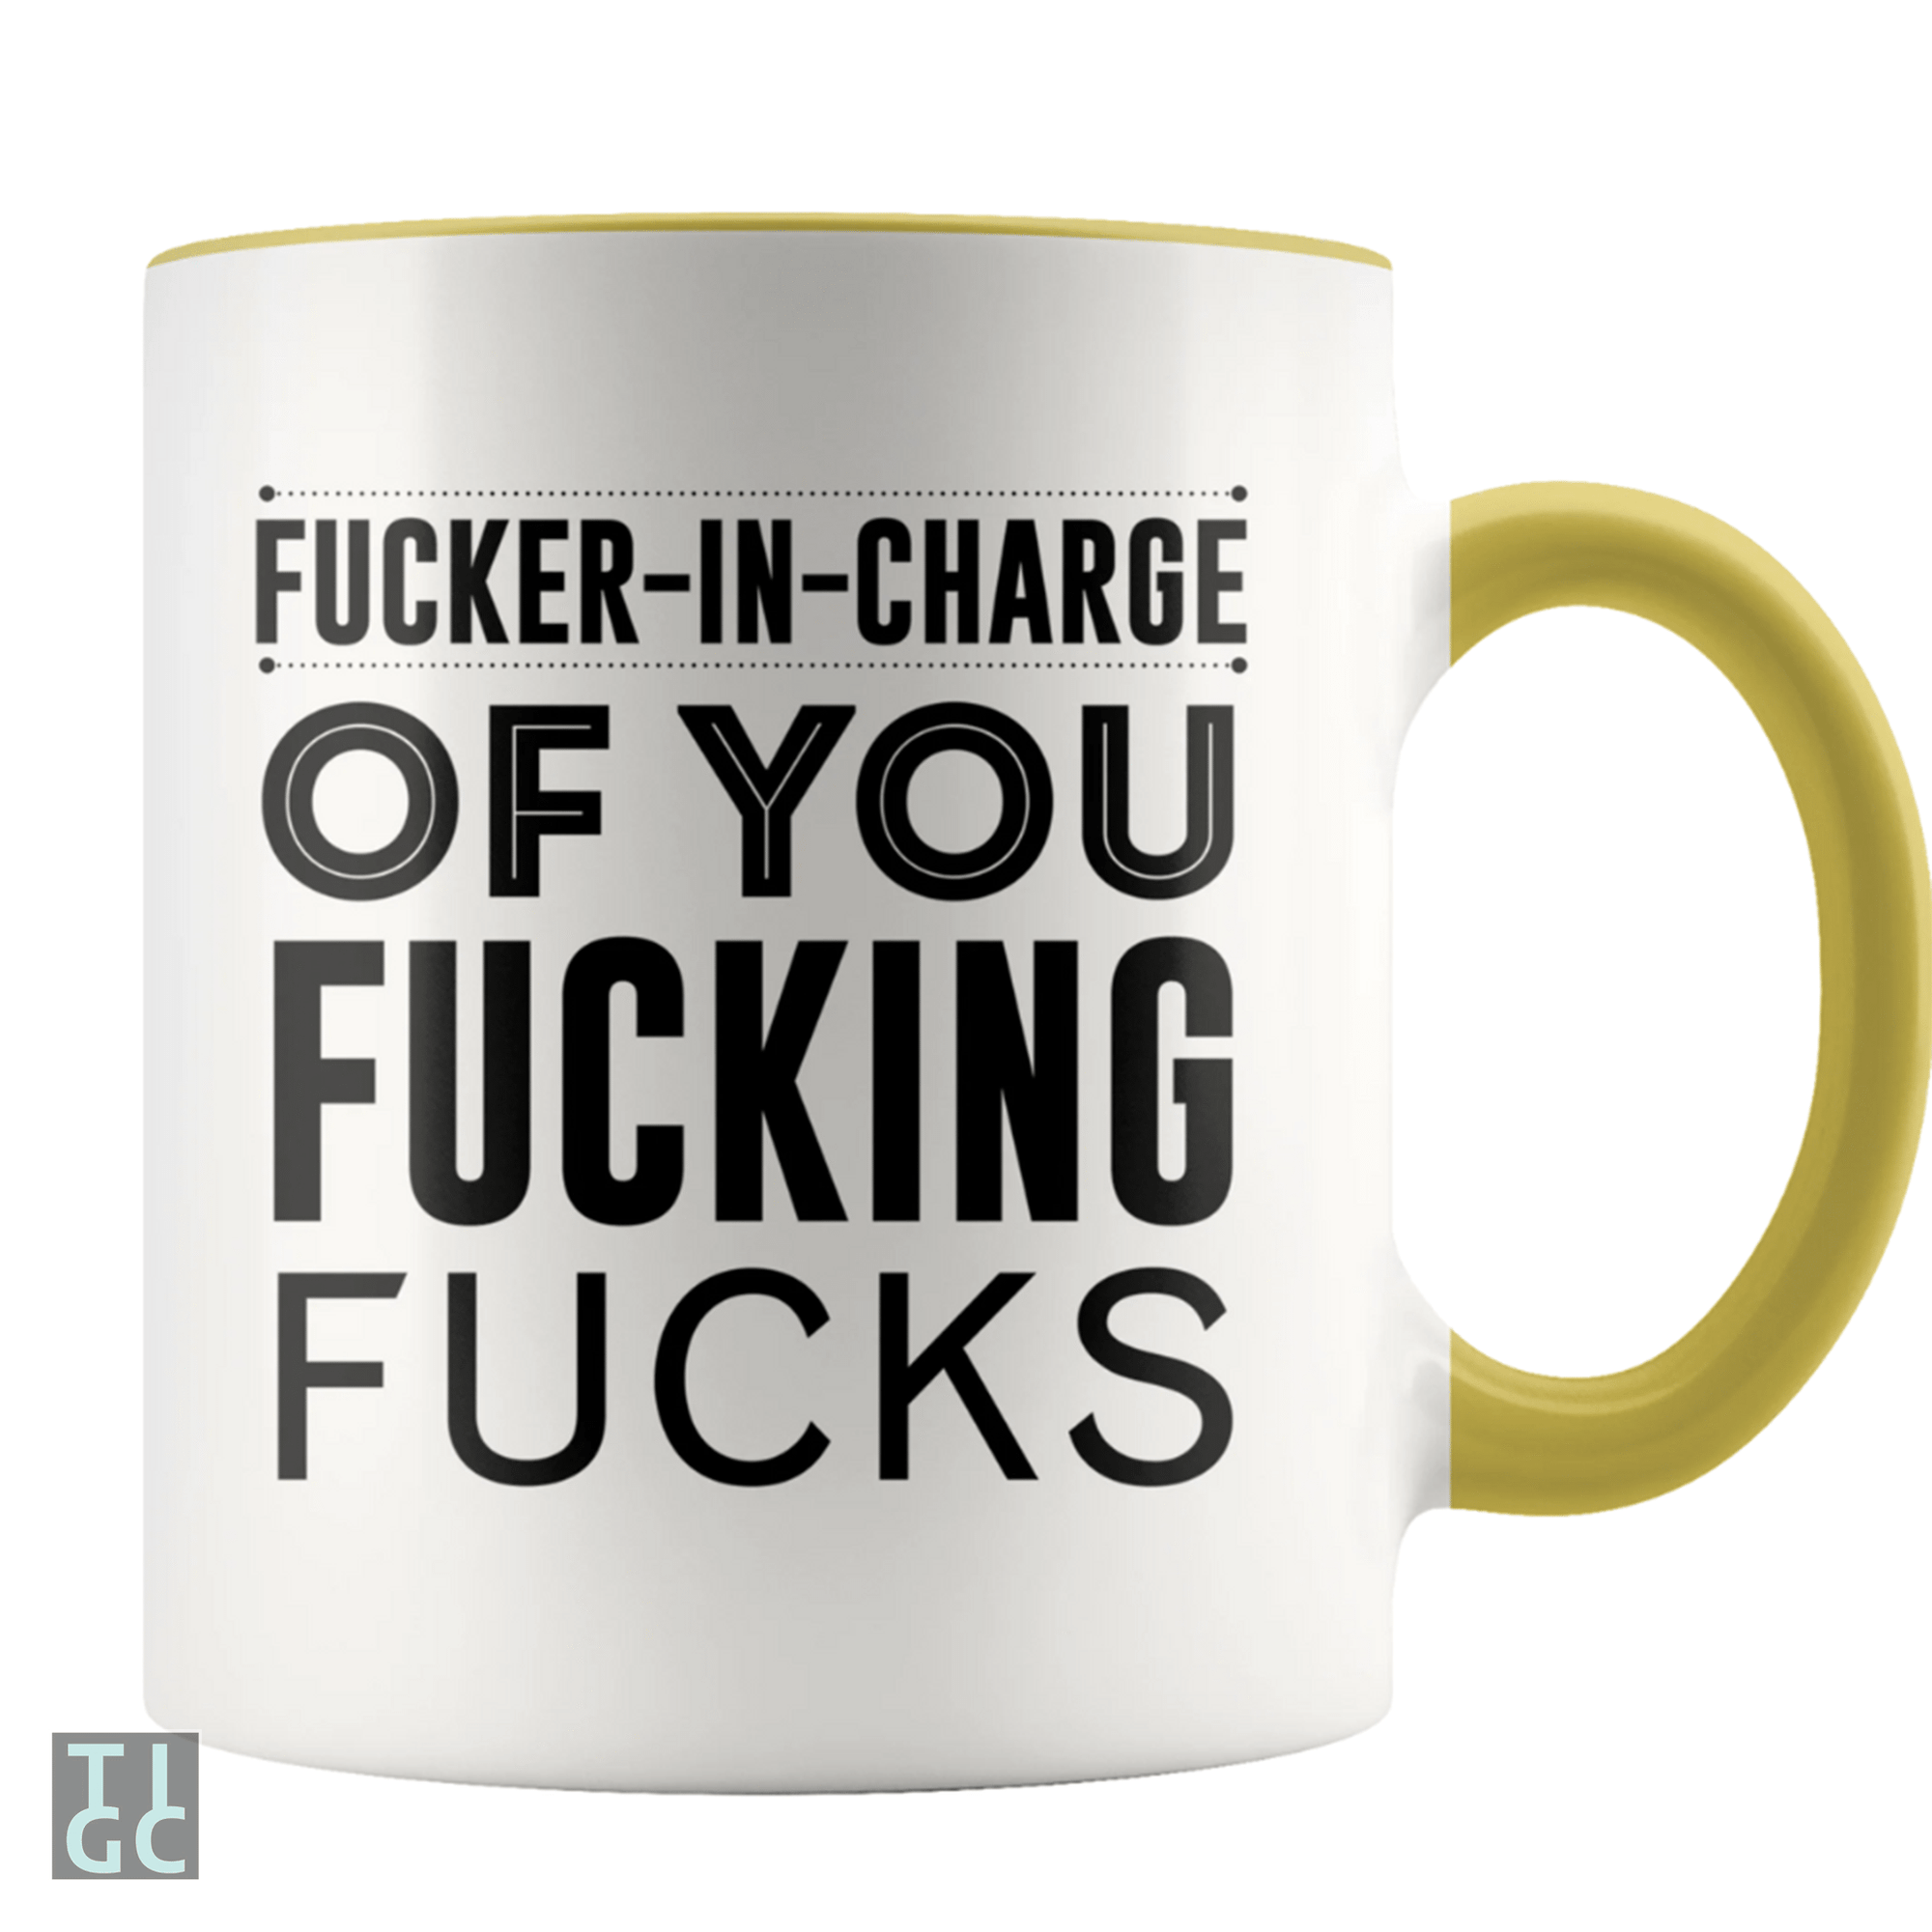 Fucker in charge of you fucking fucks Mug